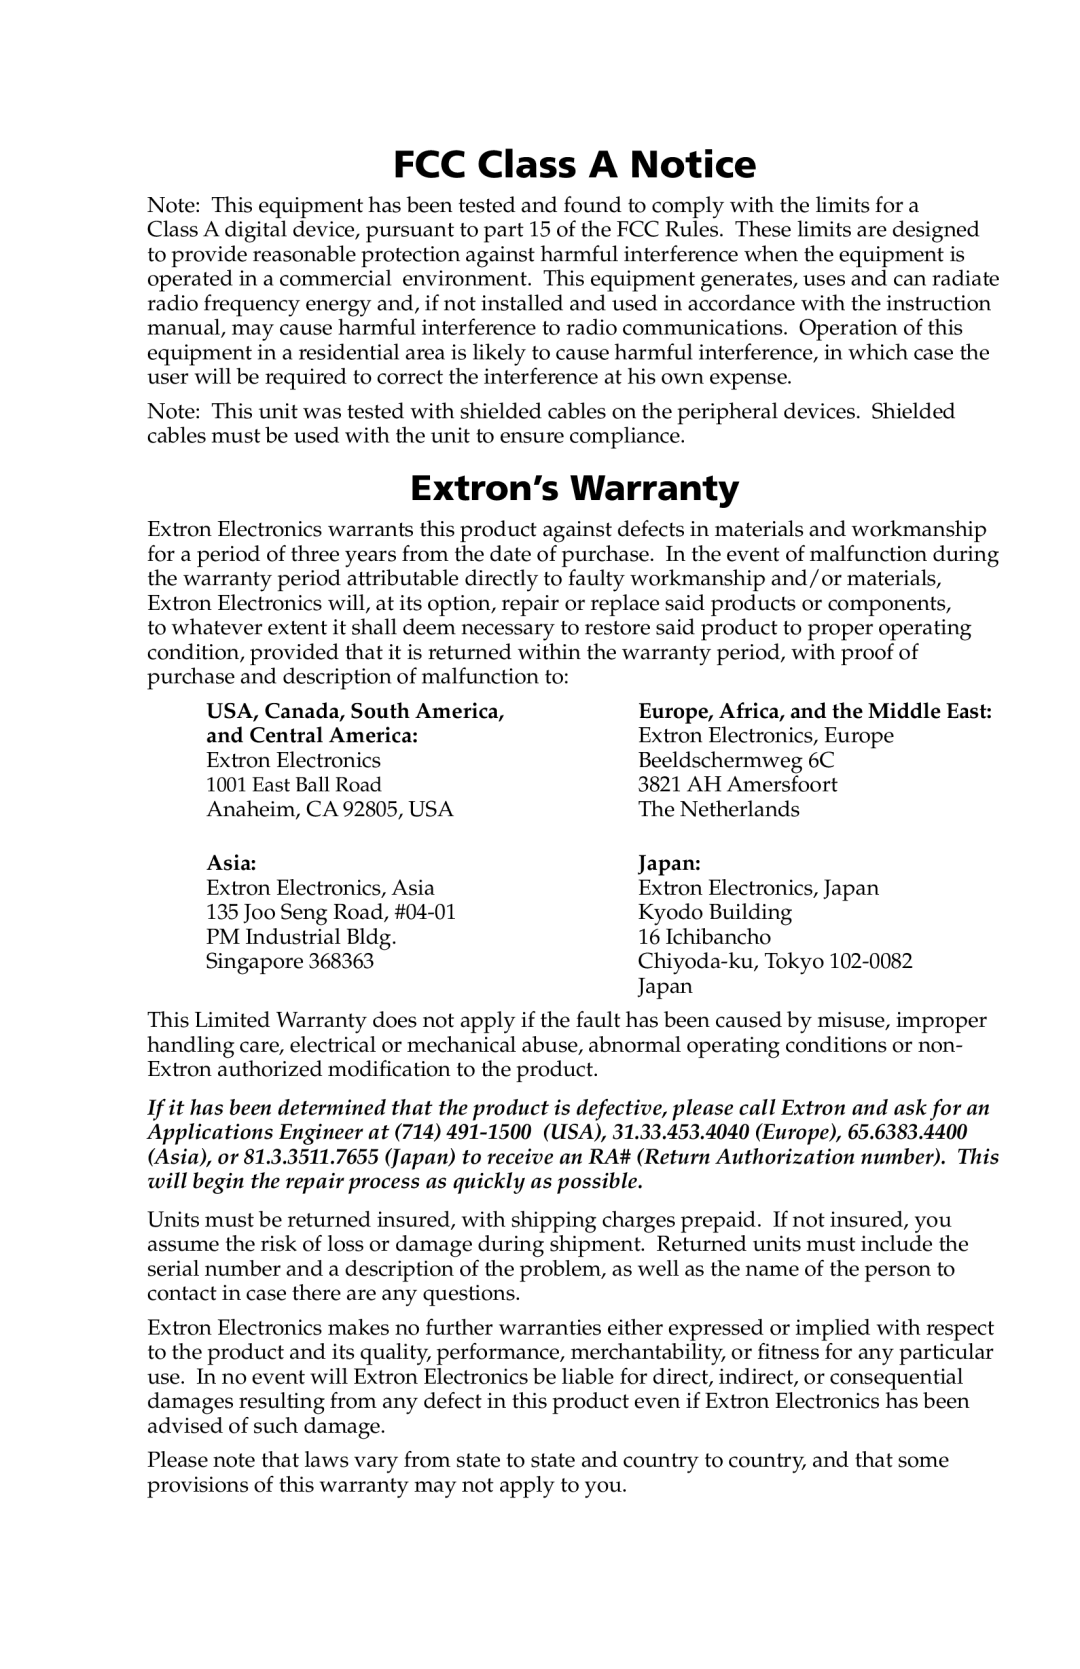 Extron electronic P/2 DA12 Series FCC Class A Notice, Extron’s Warranty, USA, Canada, South America, and Central America 